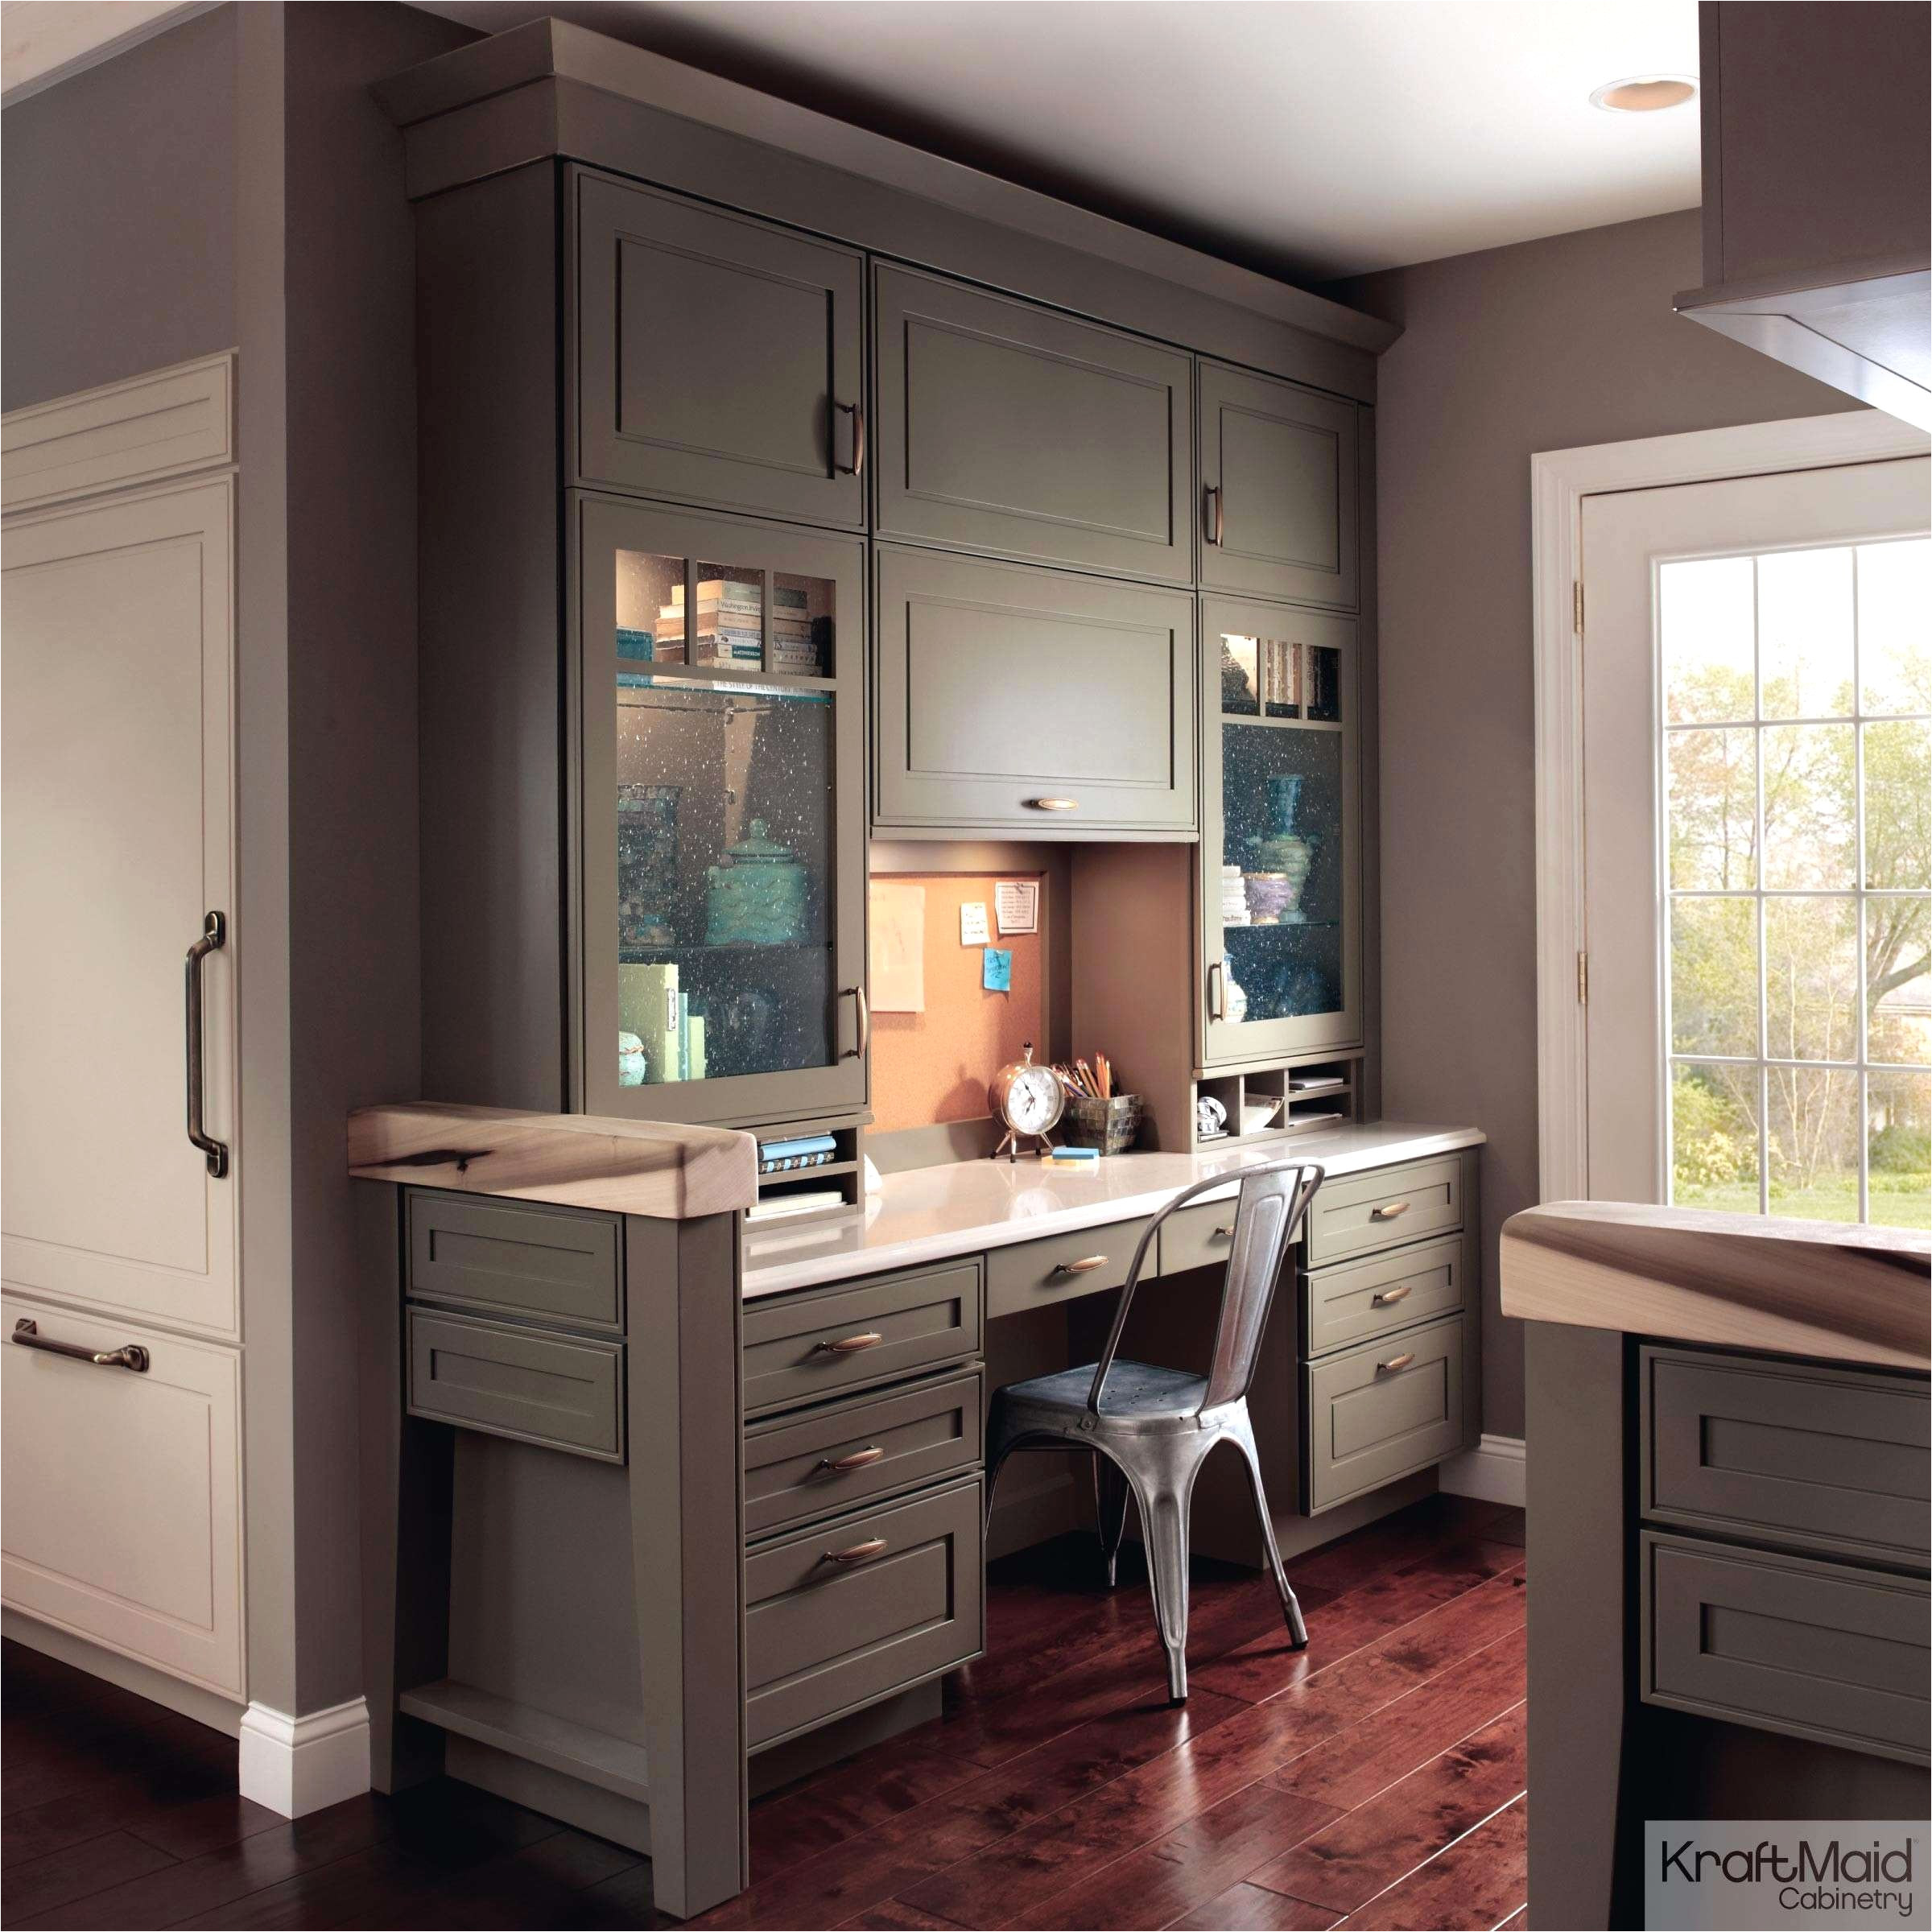 Home Architec Ideas Top Corner Kitchen Cabinet Ideas,Interior Design Ideas For Home Office Space